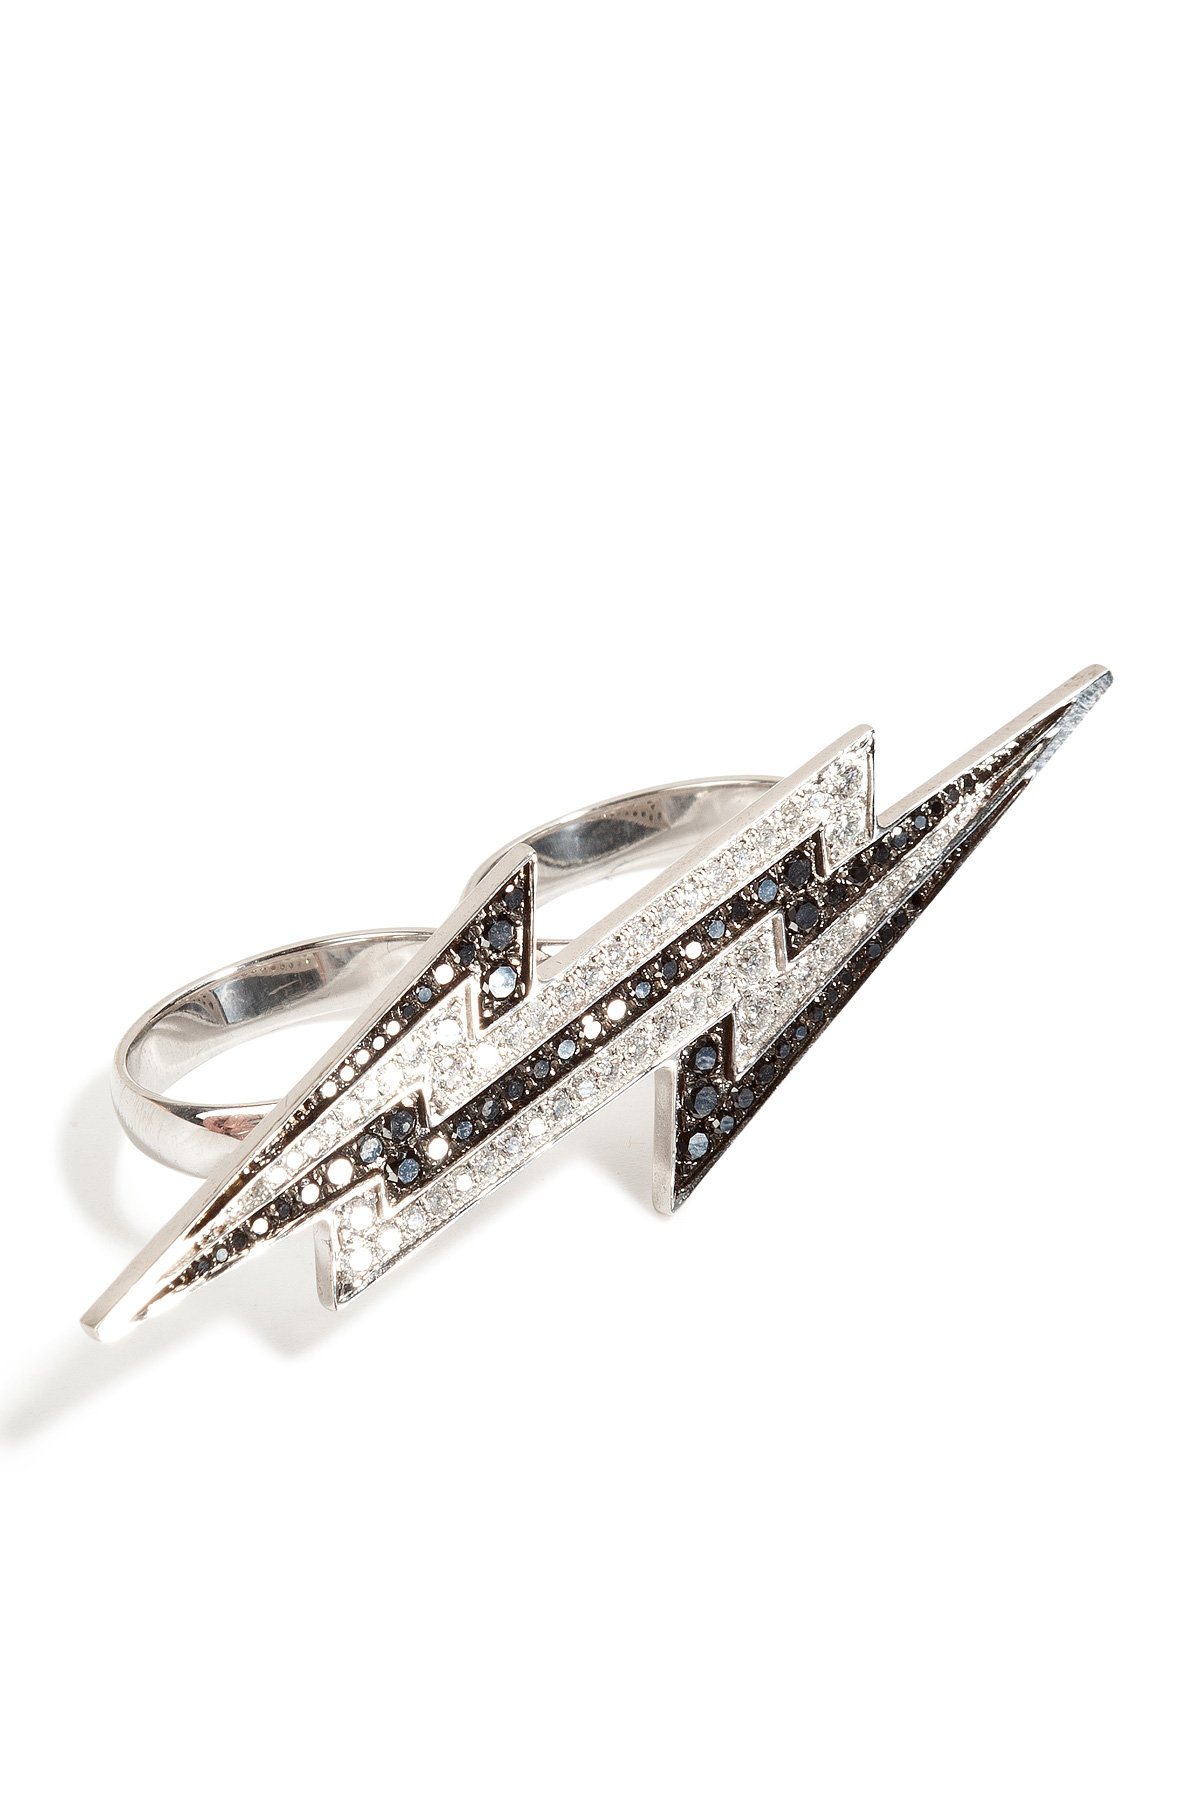 Sterling Silver Lightening Bolt Earrings with Diamonds by Lynn Ban